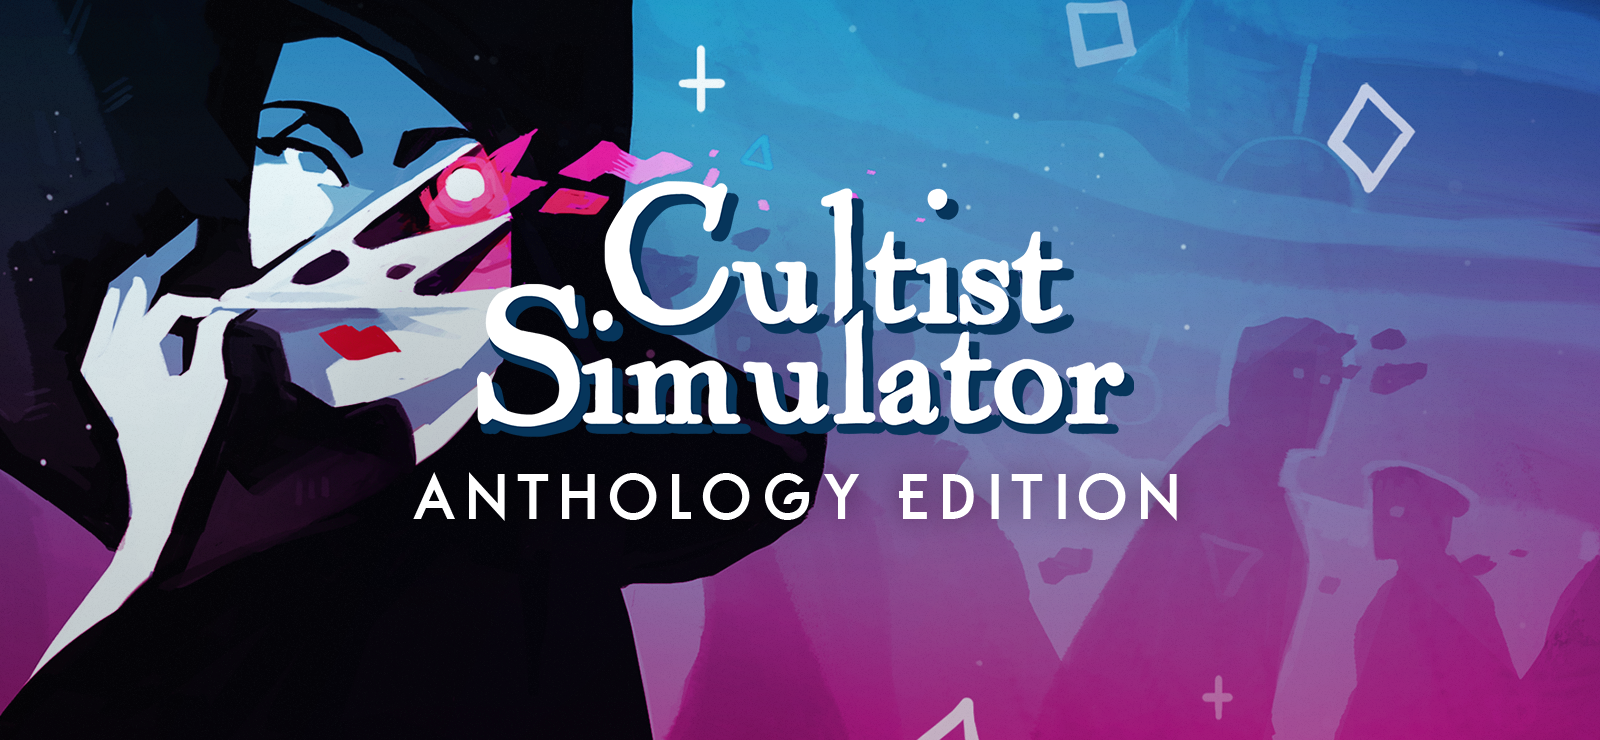 Cultist Simulator Anthology Edition